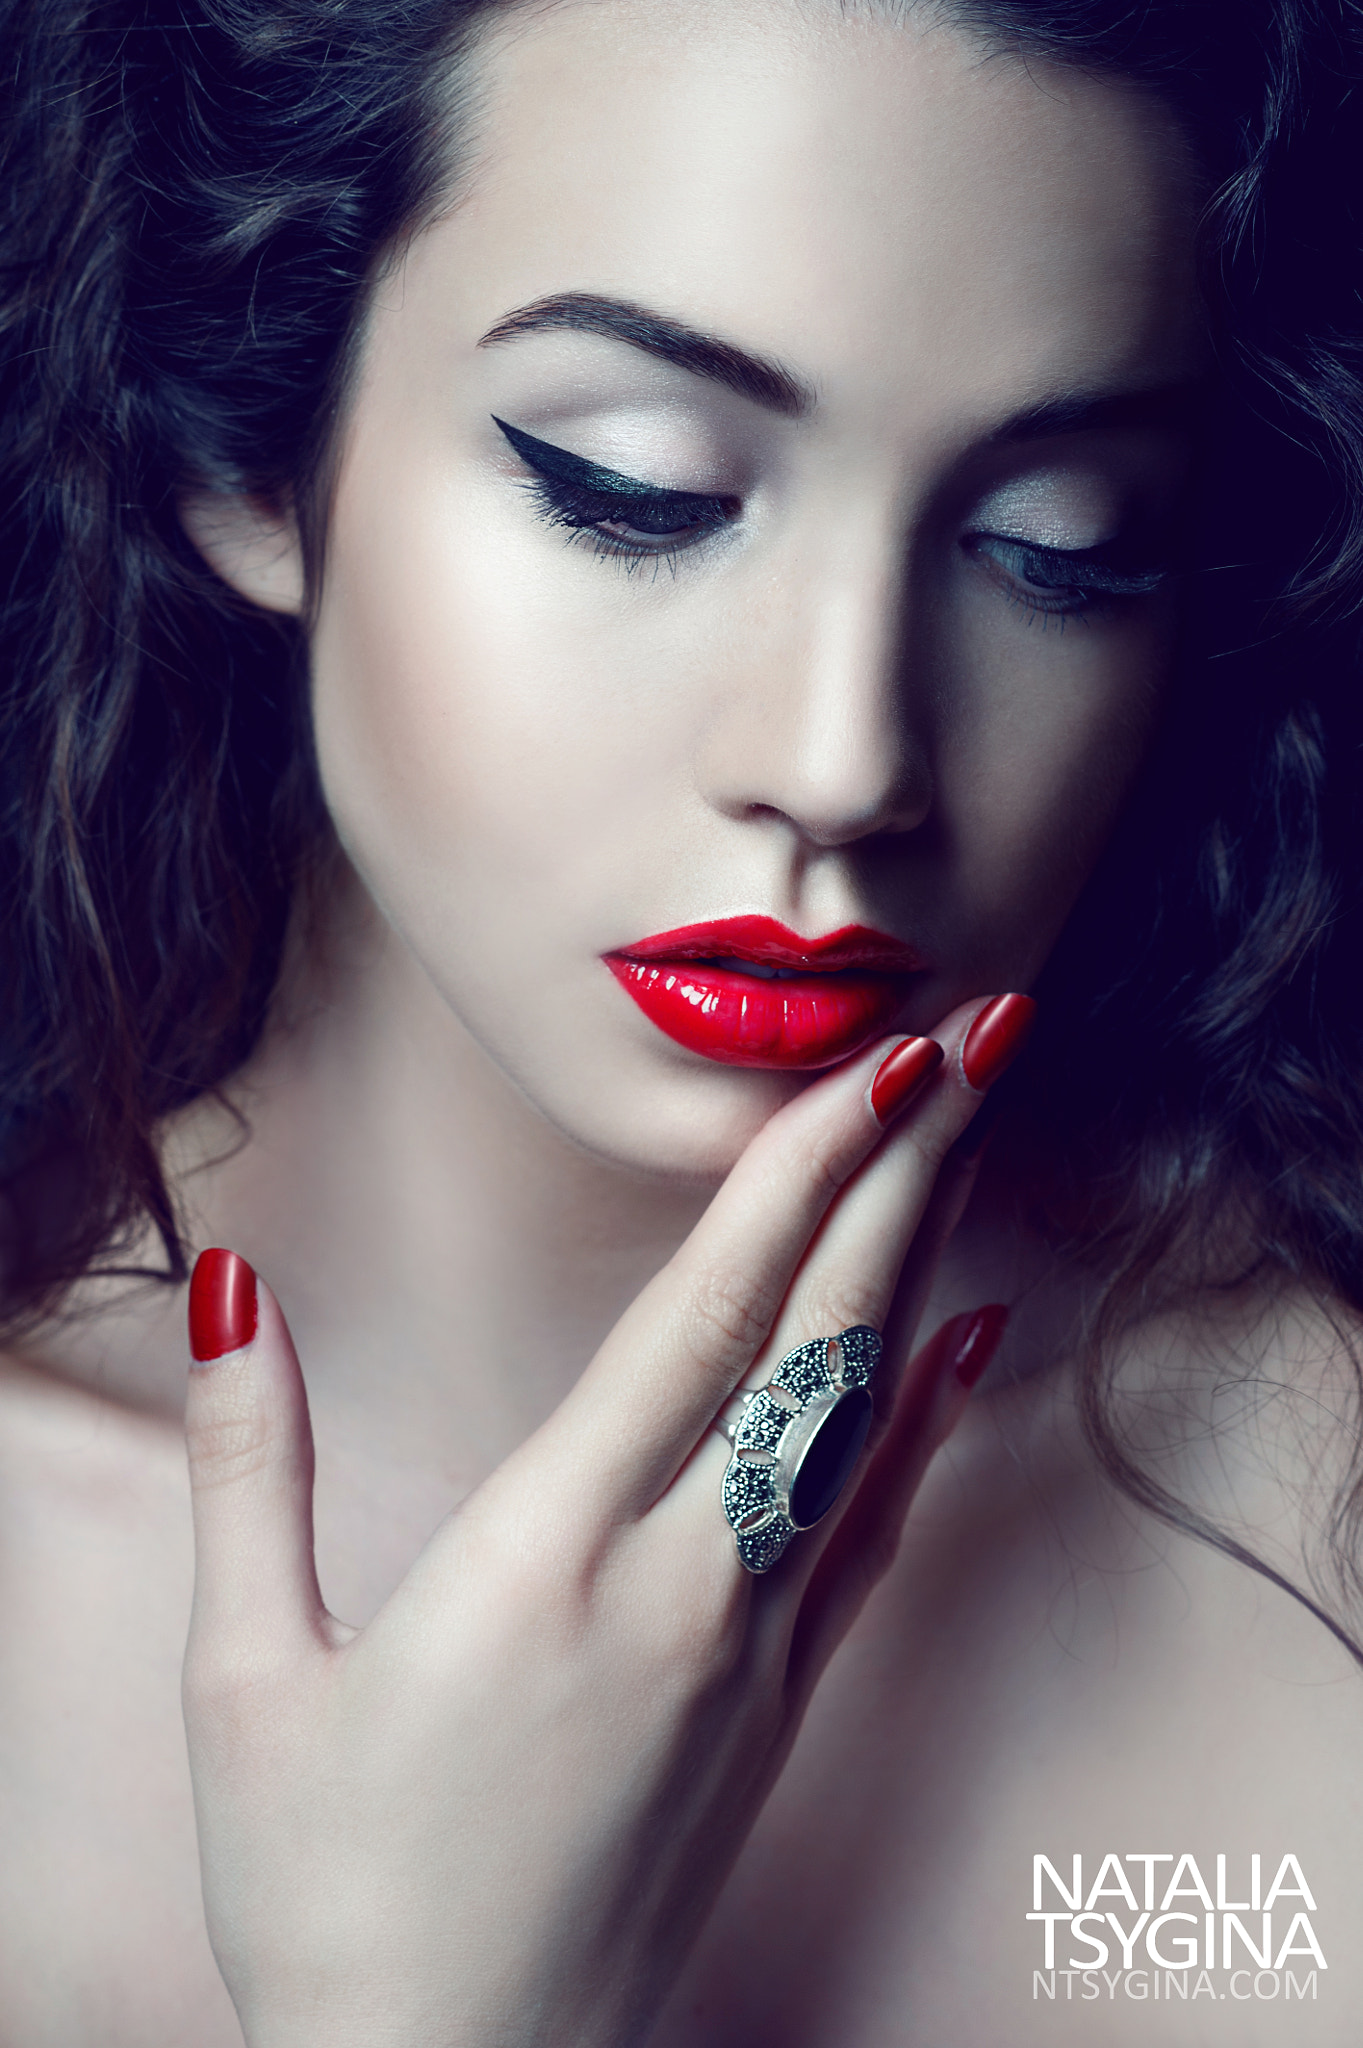 Natalia Tsygina Women Wavy Hair Brunette Make Up Eyeliner Lipstick Red Lipstick Jewelry Rings Painte 1363x2048